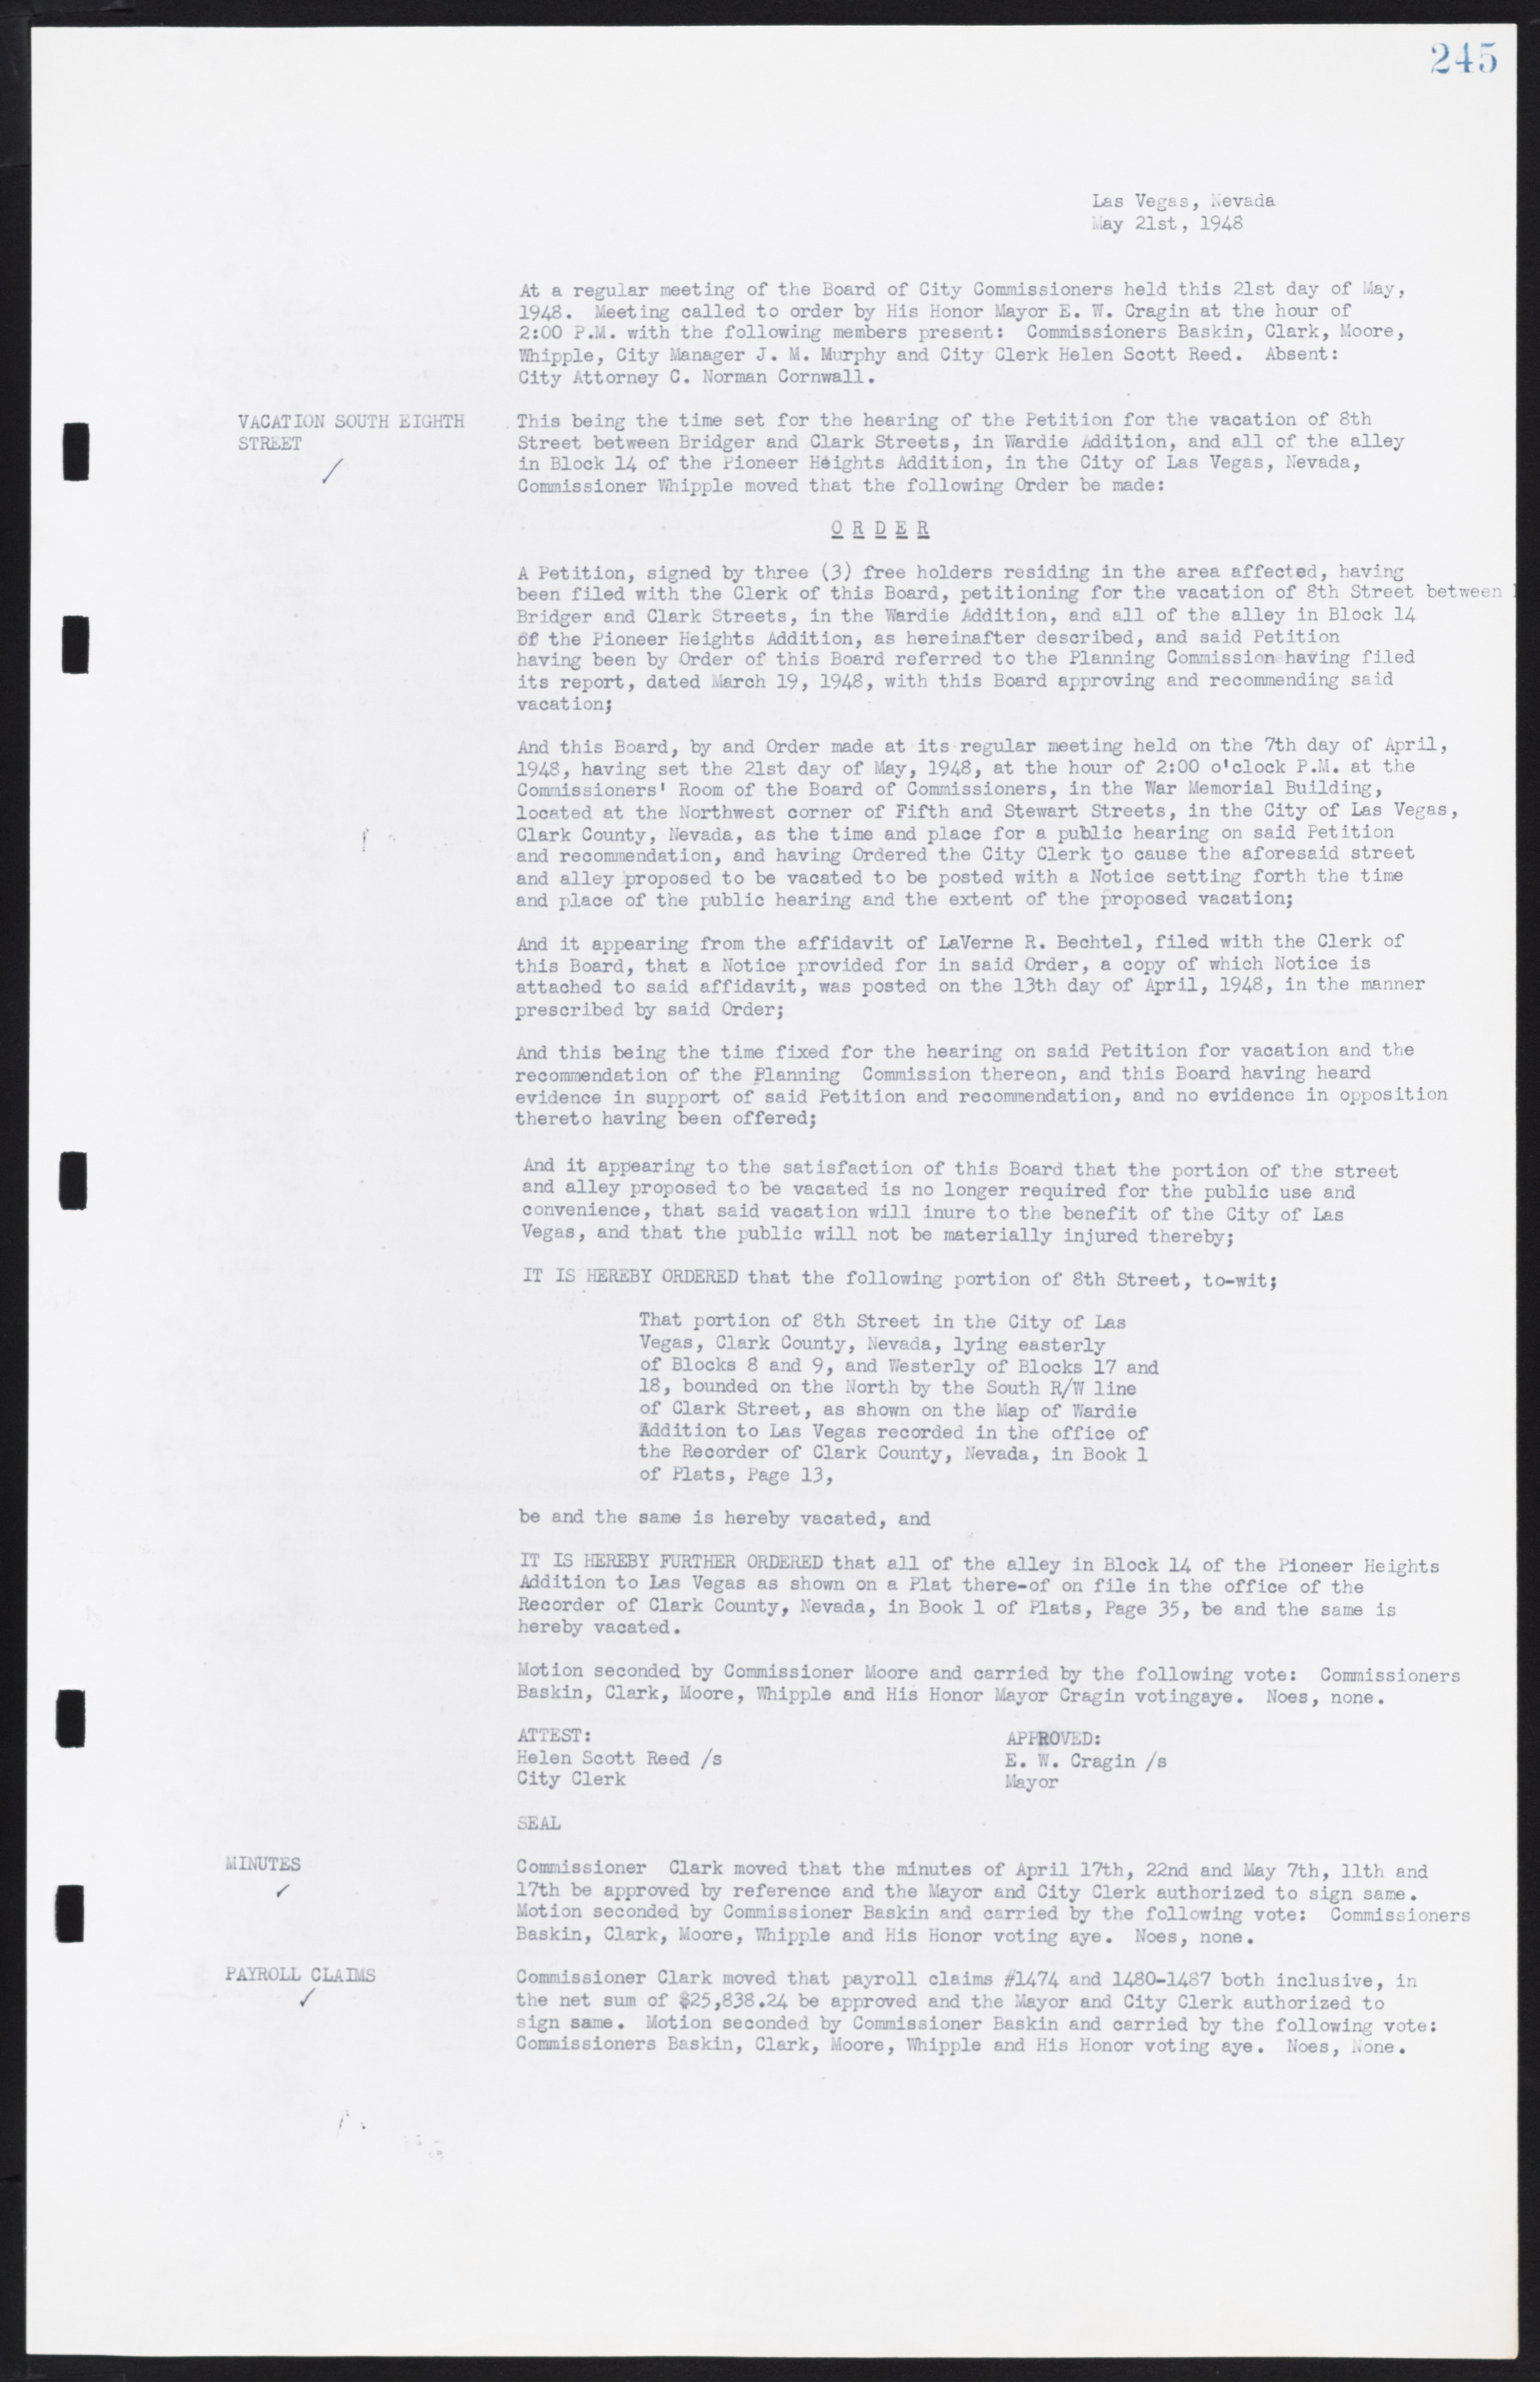 Las Vegas City Commission Minutes, January 7, 1947 to October 26, 1949, lvc000006-267